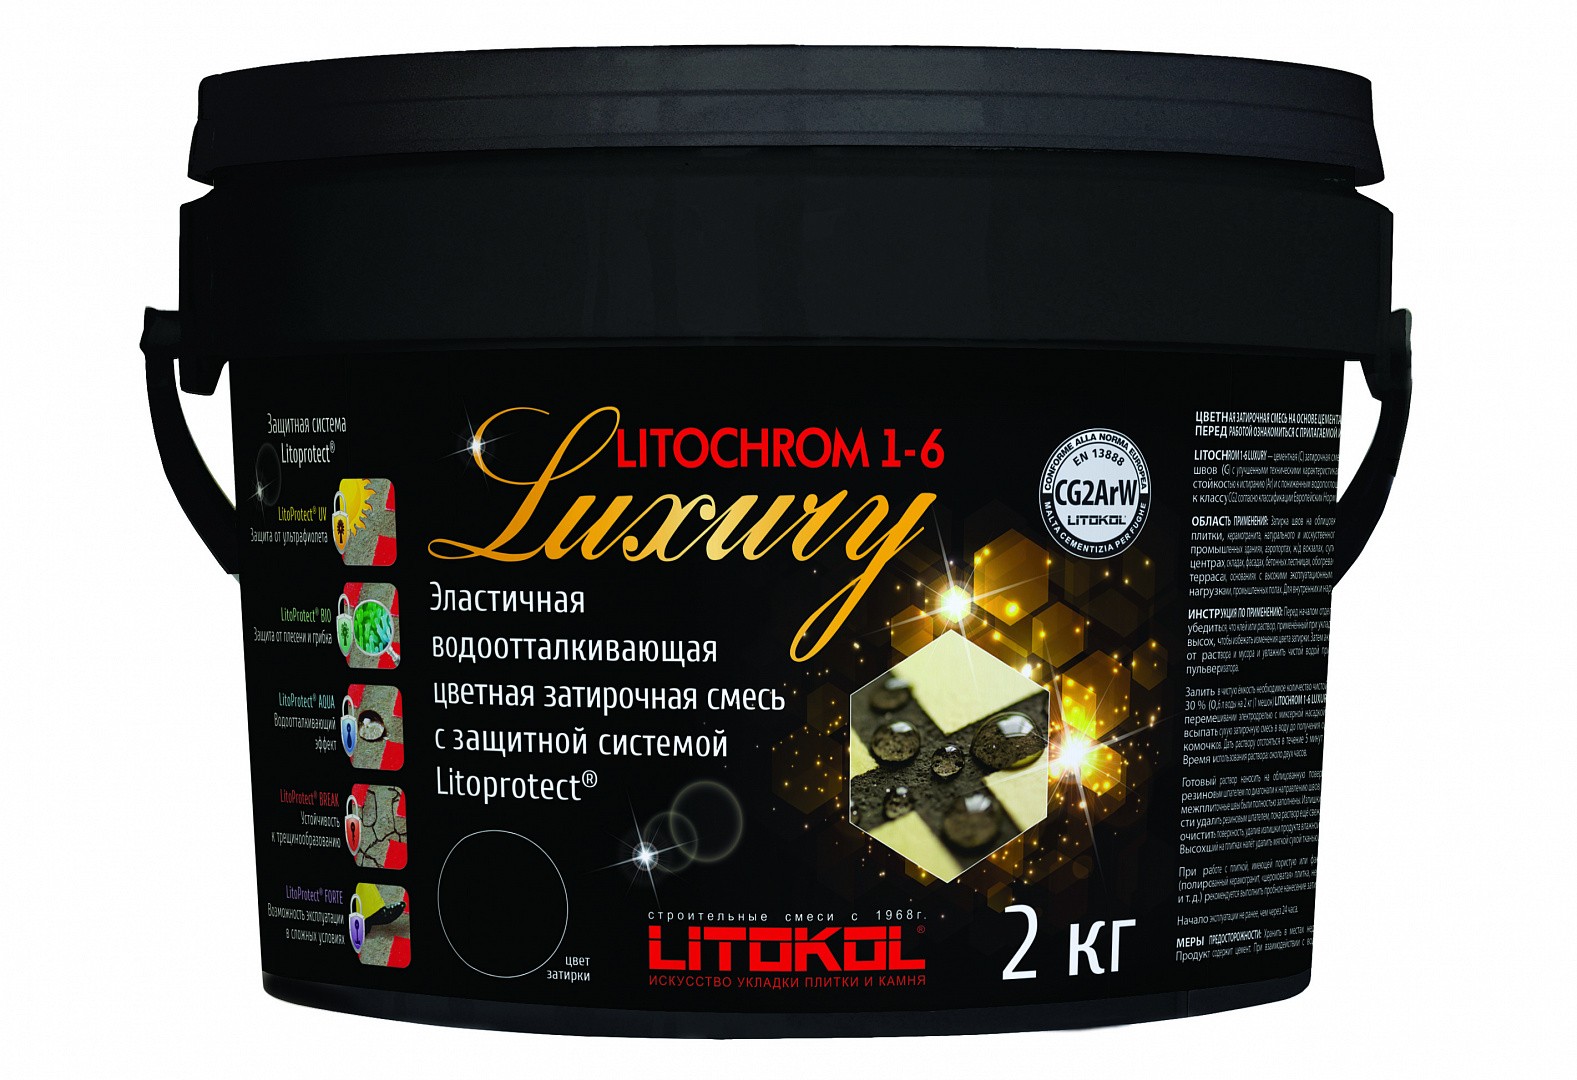 Цементная затирочная смесь LITOCHROM 1-6 LUXURY C.30